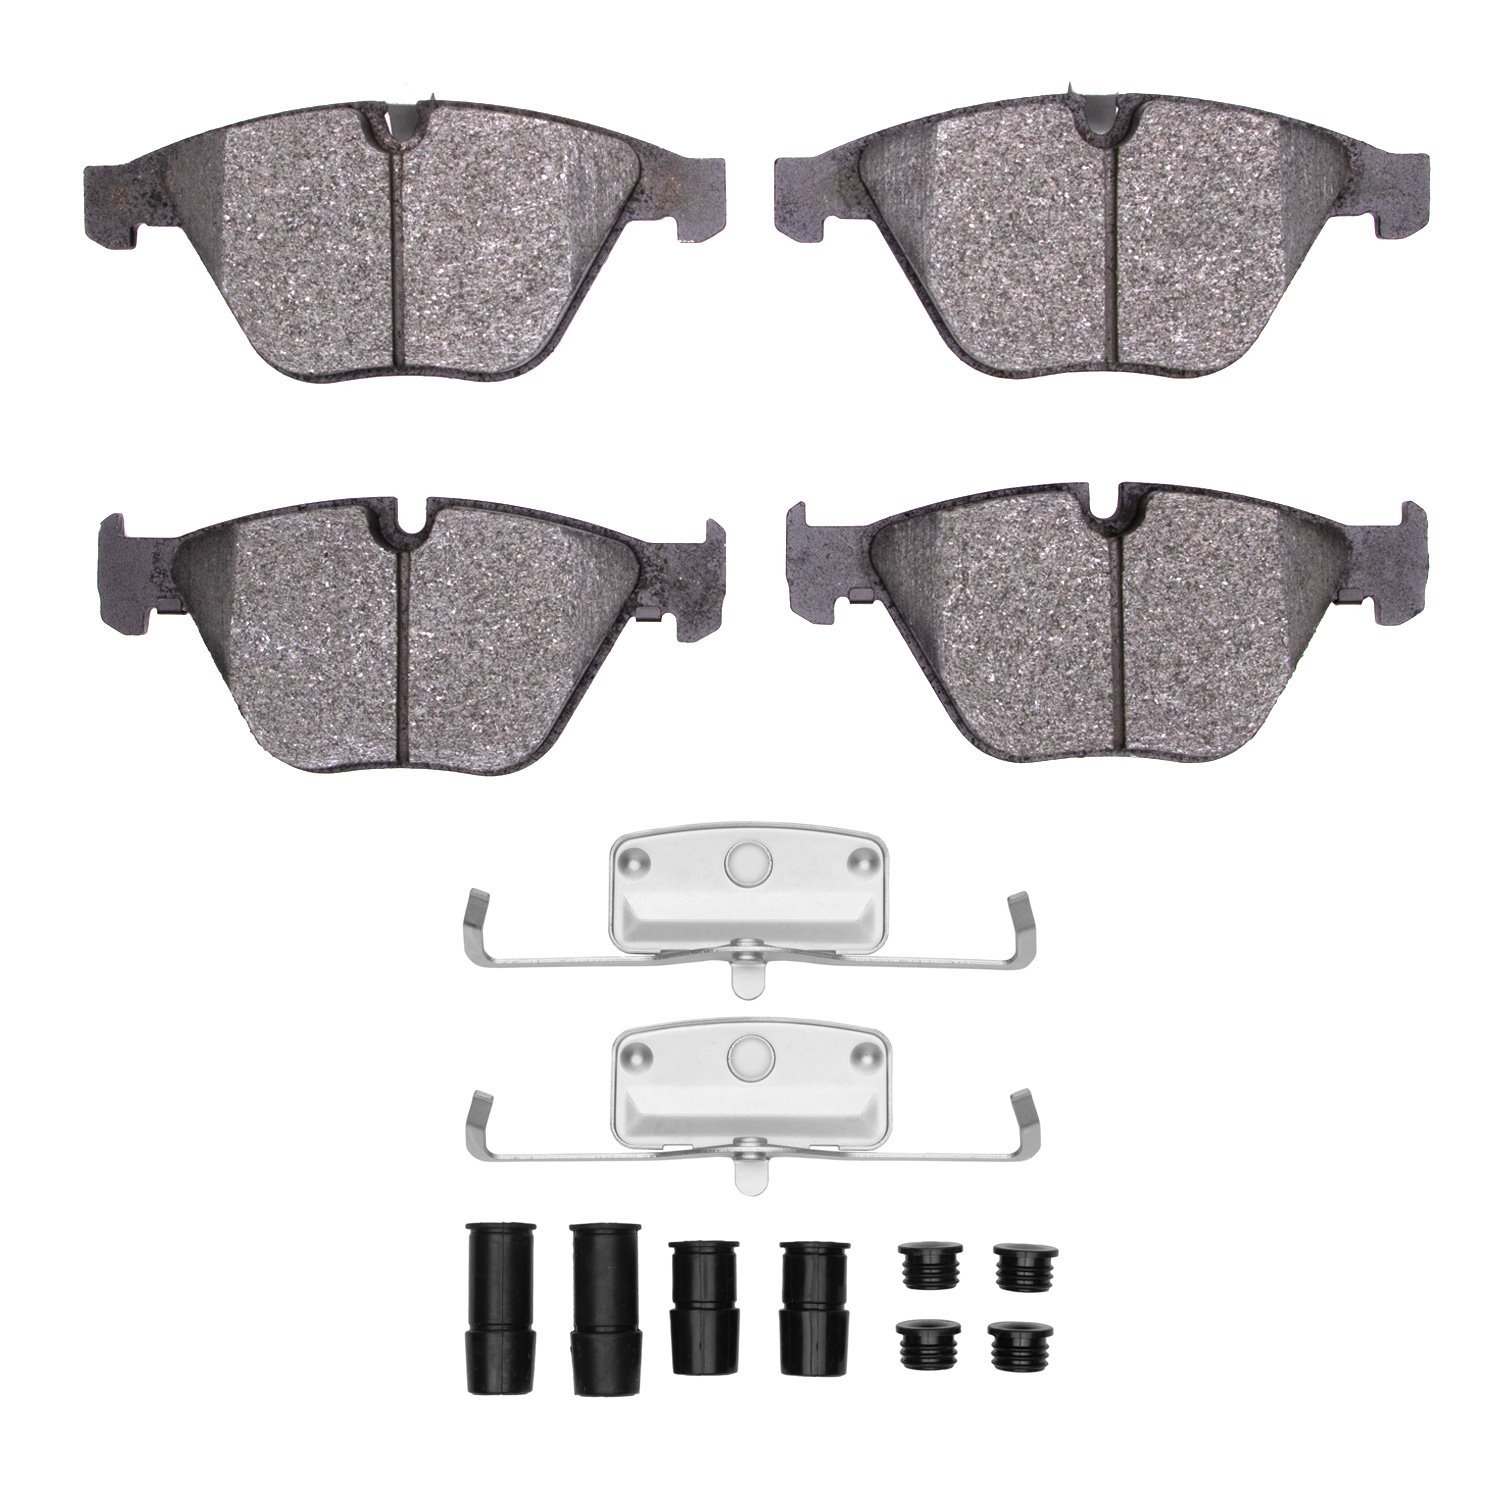 1310-0918-11 3000-Series Ceramic Brake Pads & Hardware Kit, Fits Select BMW, Position: Front